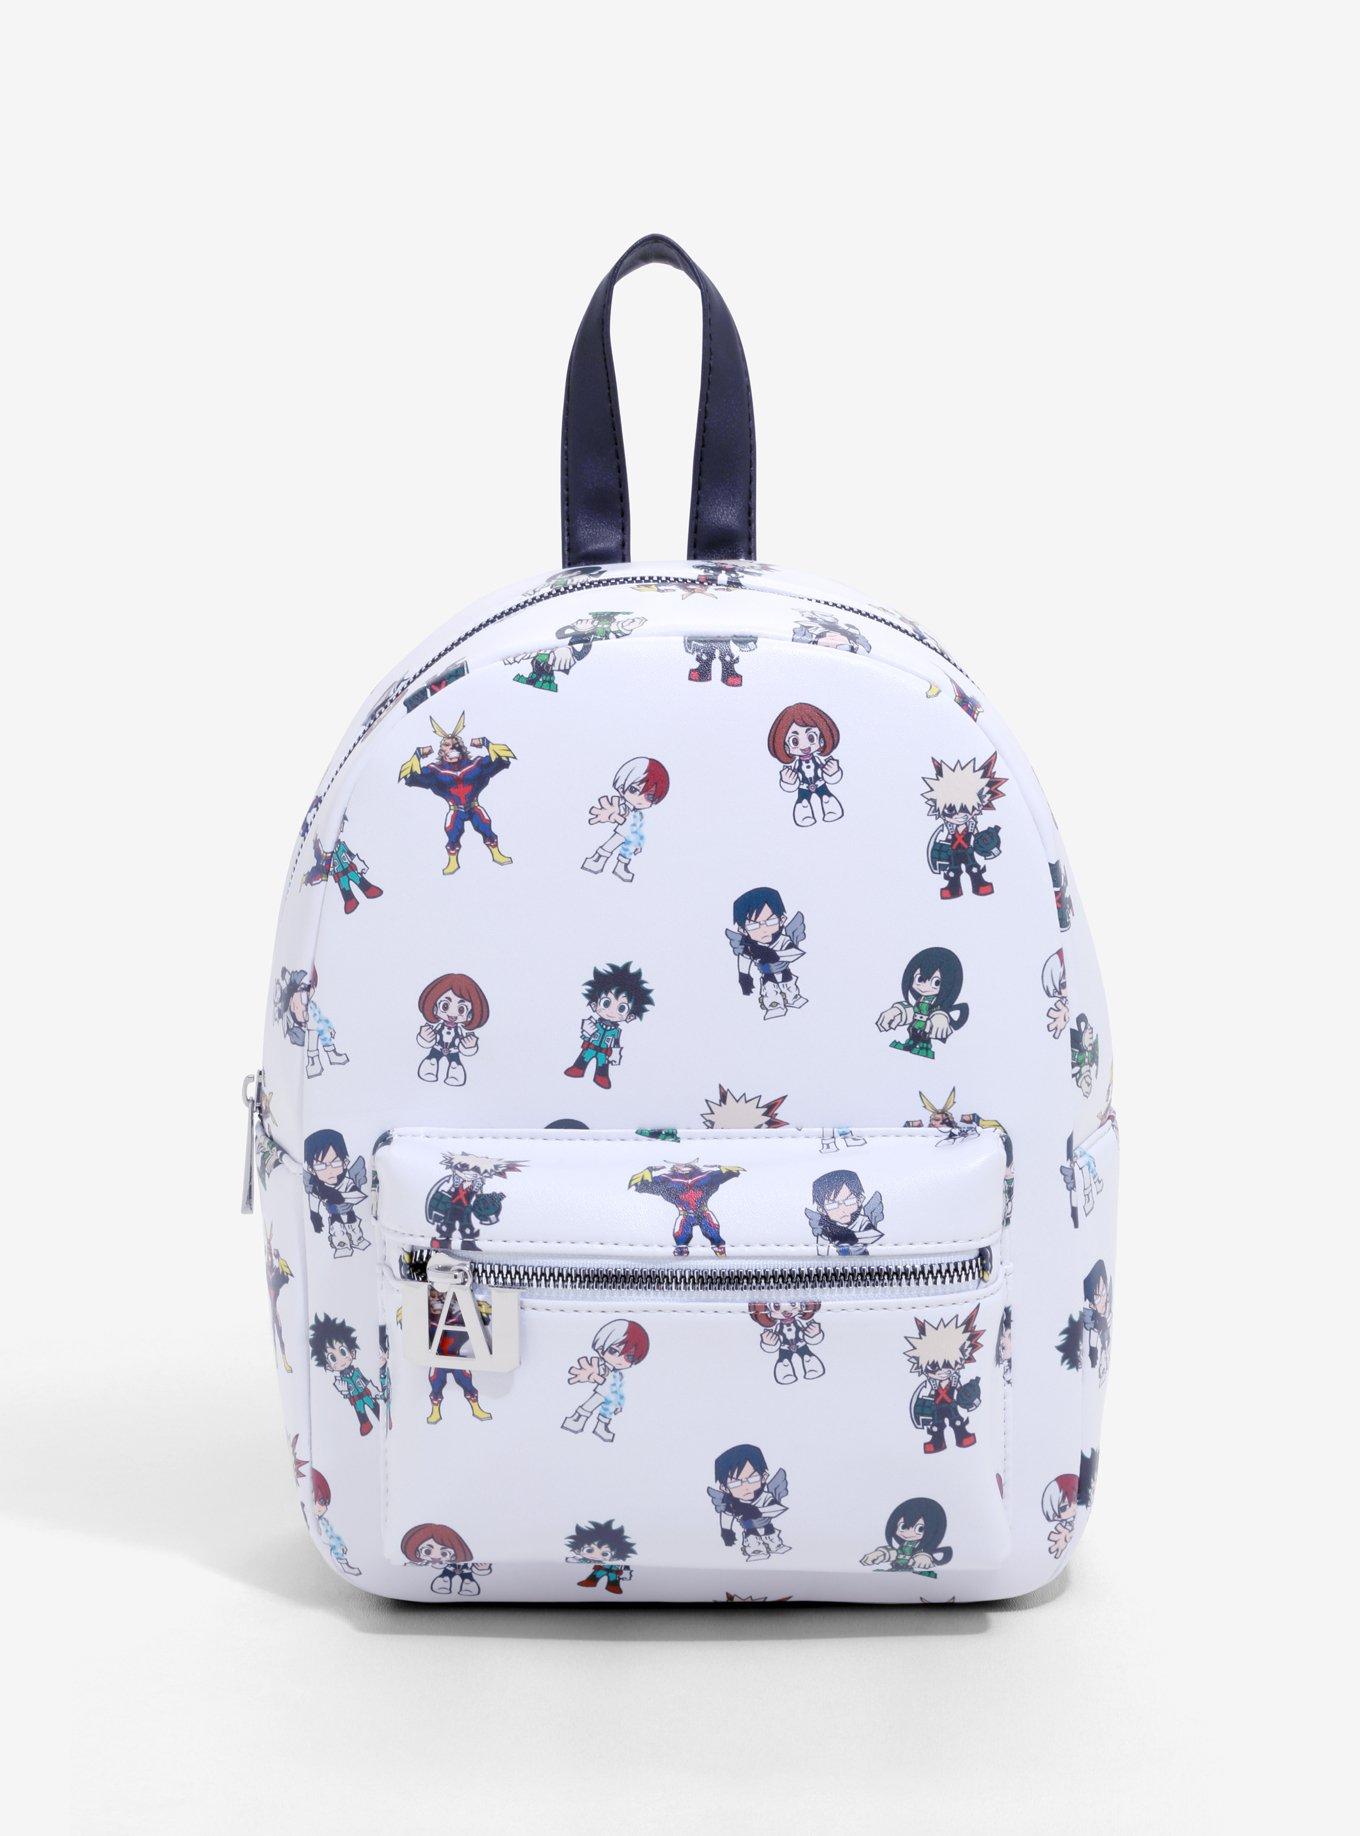 Hot Topic Anime Backpacks